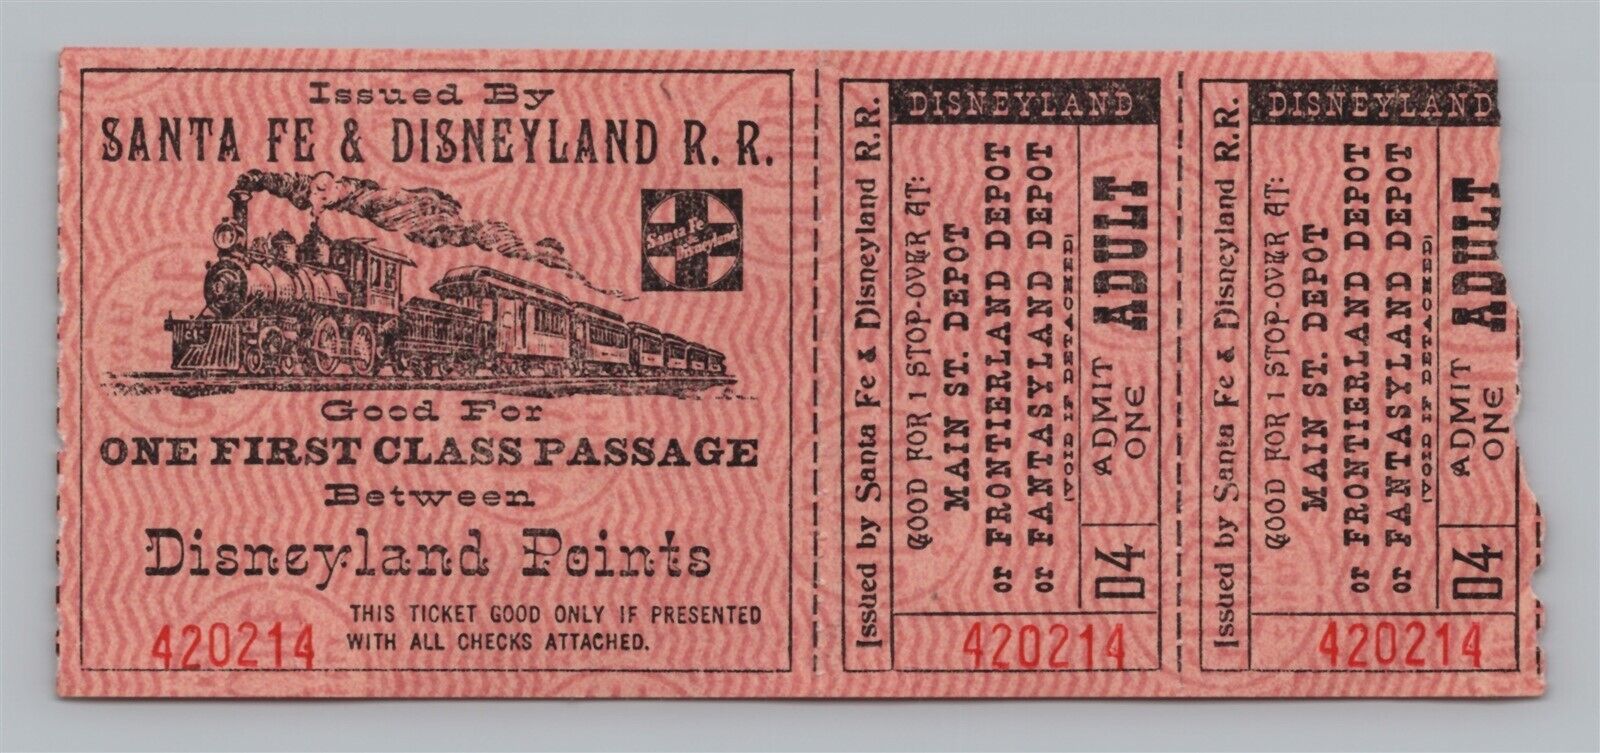 1957 Vintage Disneyland Rr Santa Fe Railroad Train Ticket Strip Orange Disney